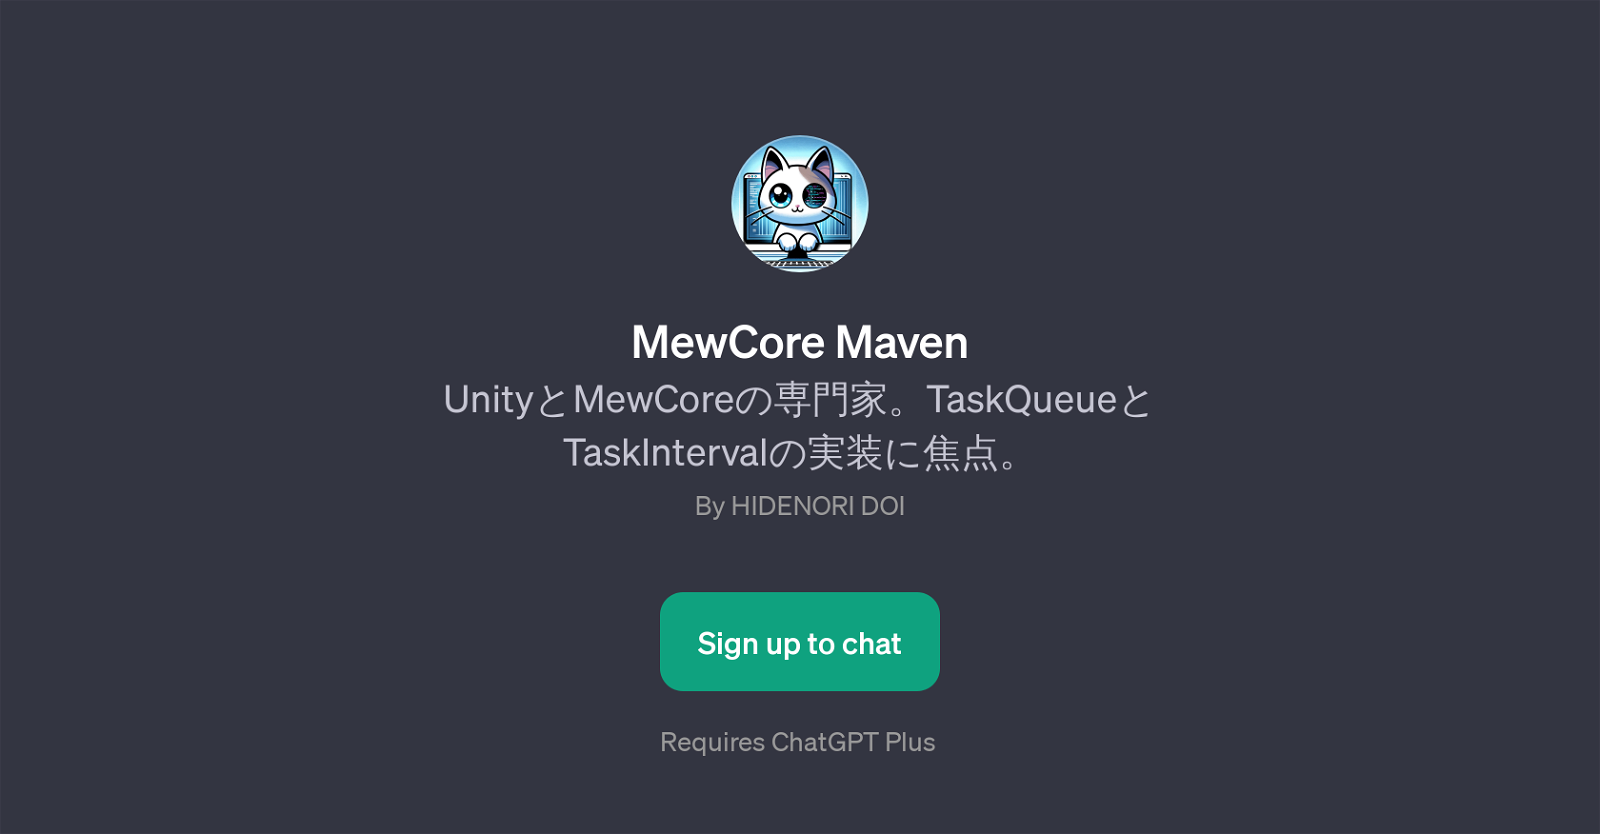 MewCore Maven website